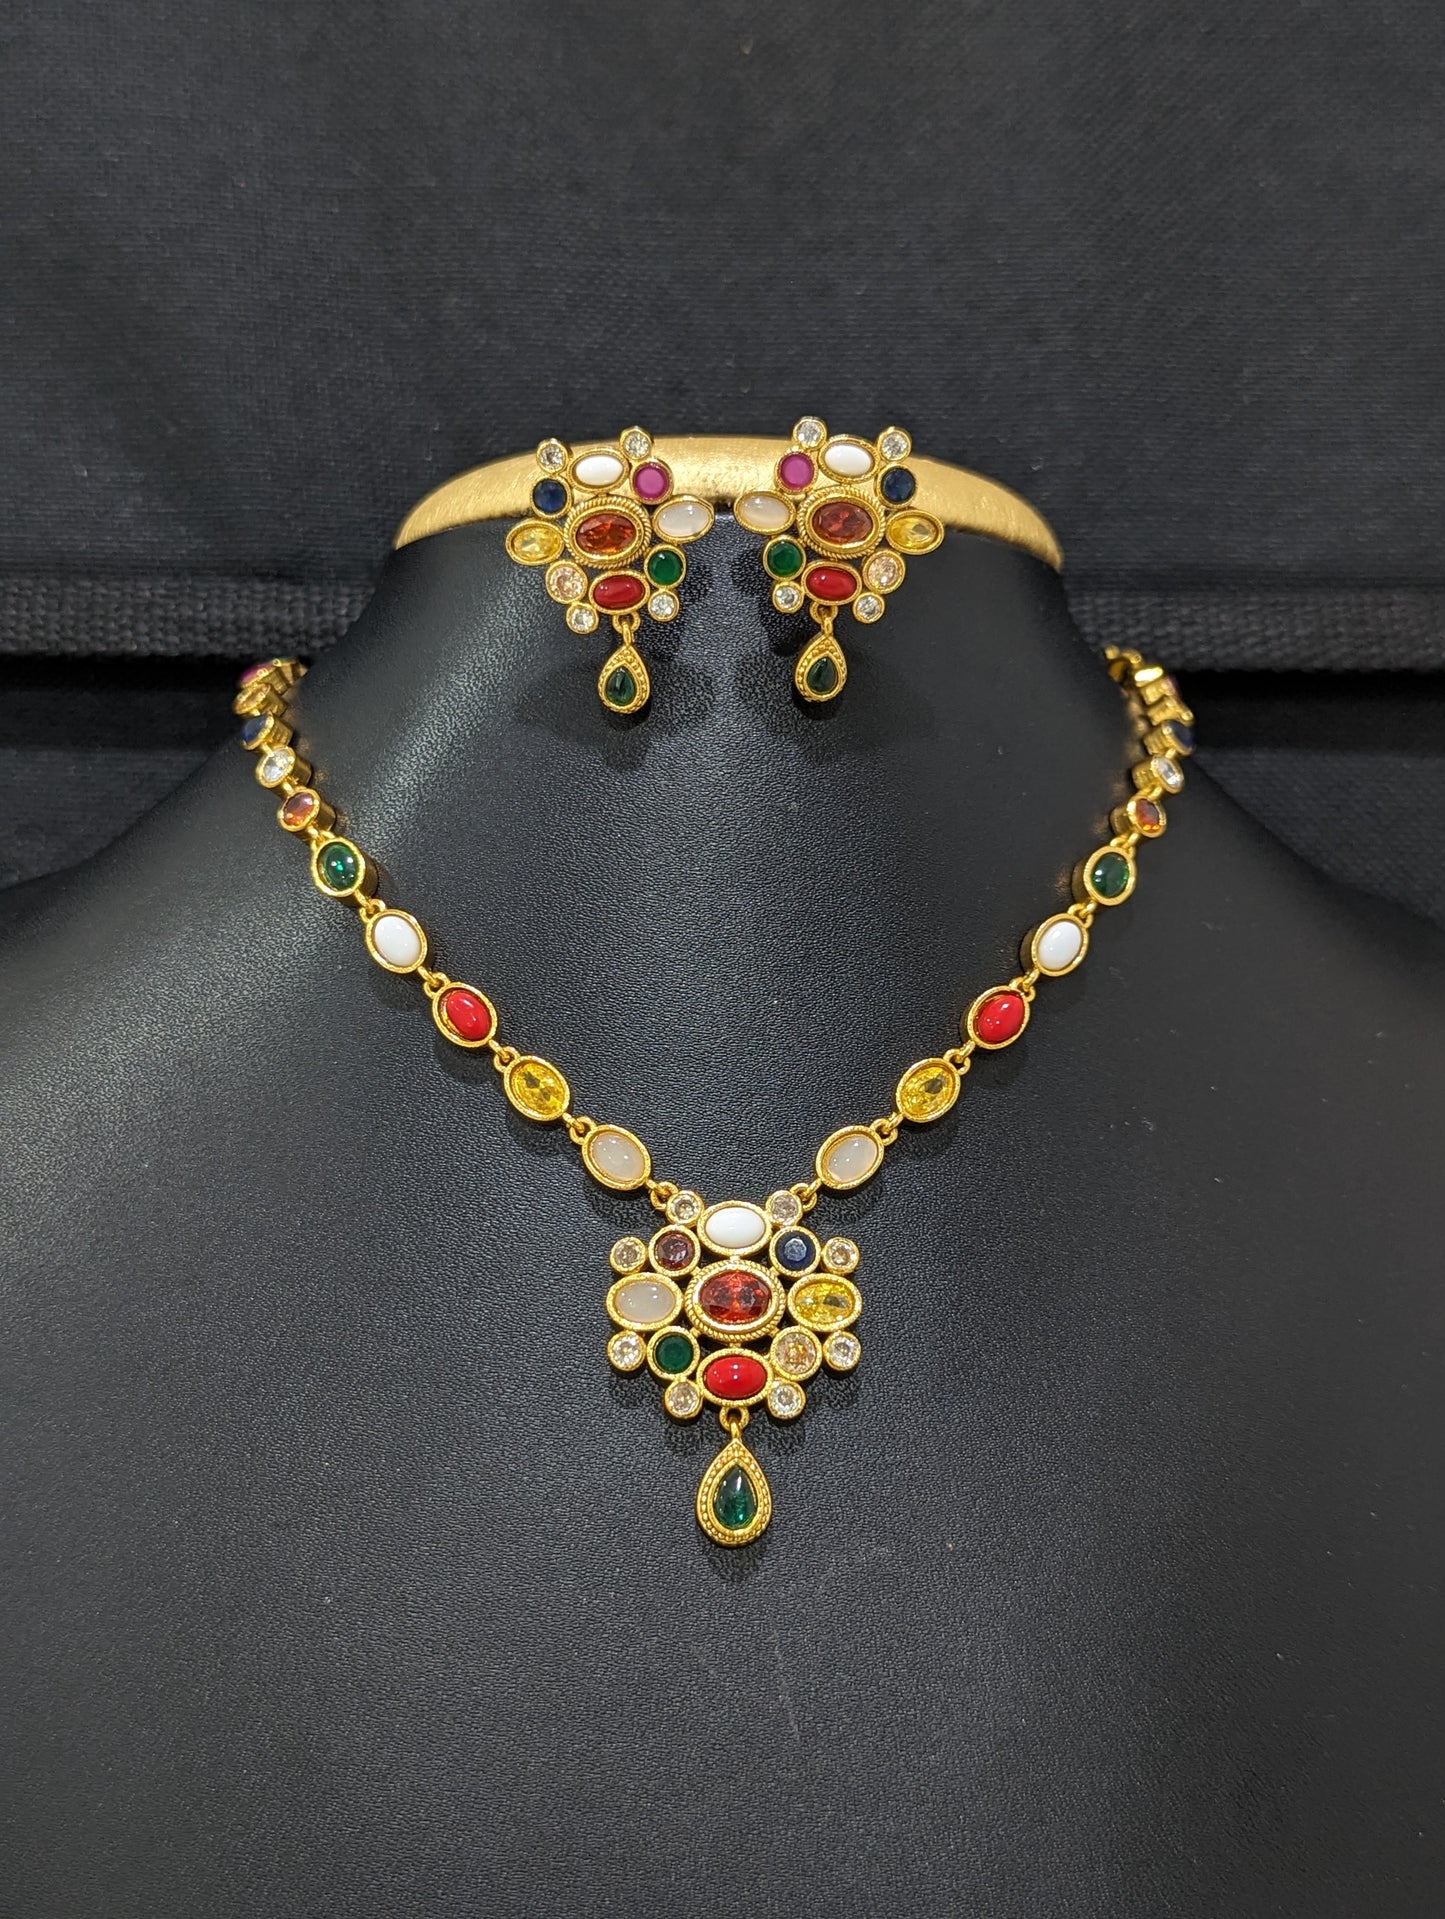 Navratna stone Choker necklace and earrings set